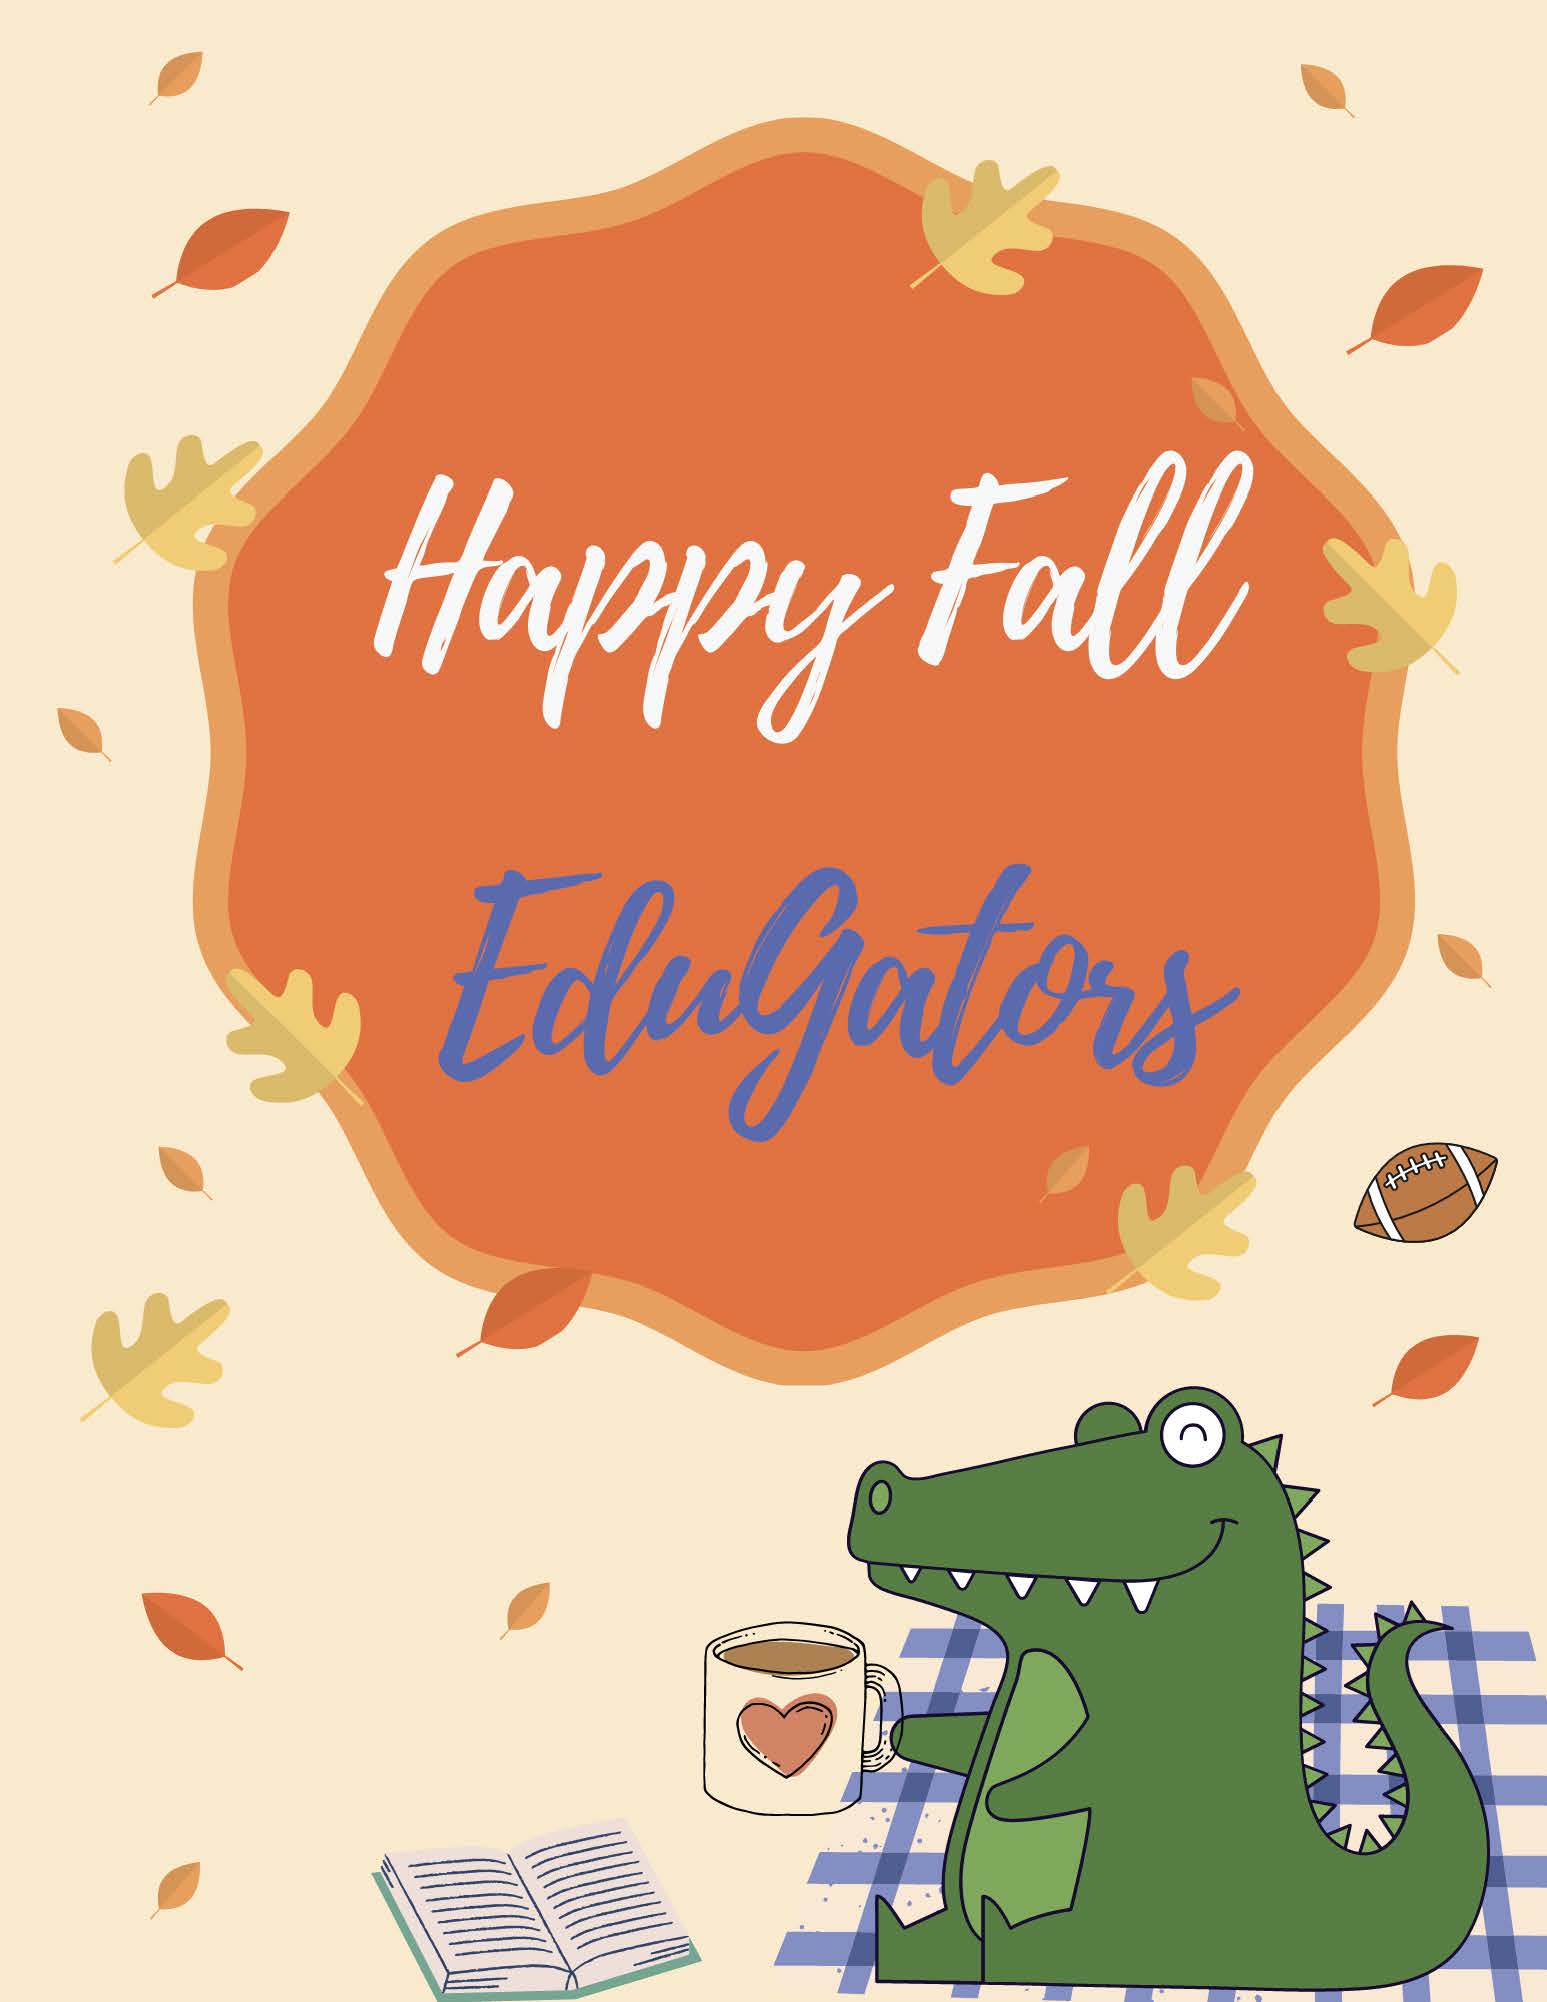 A poster greeting "Happy Fall EduGators".